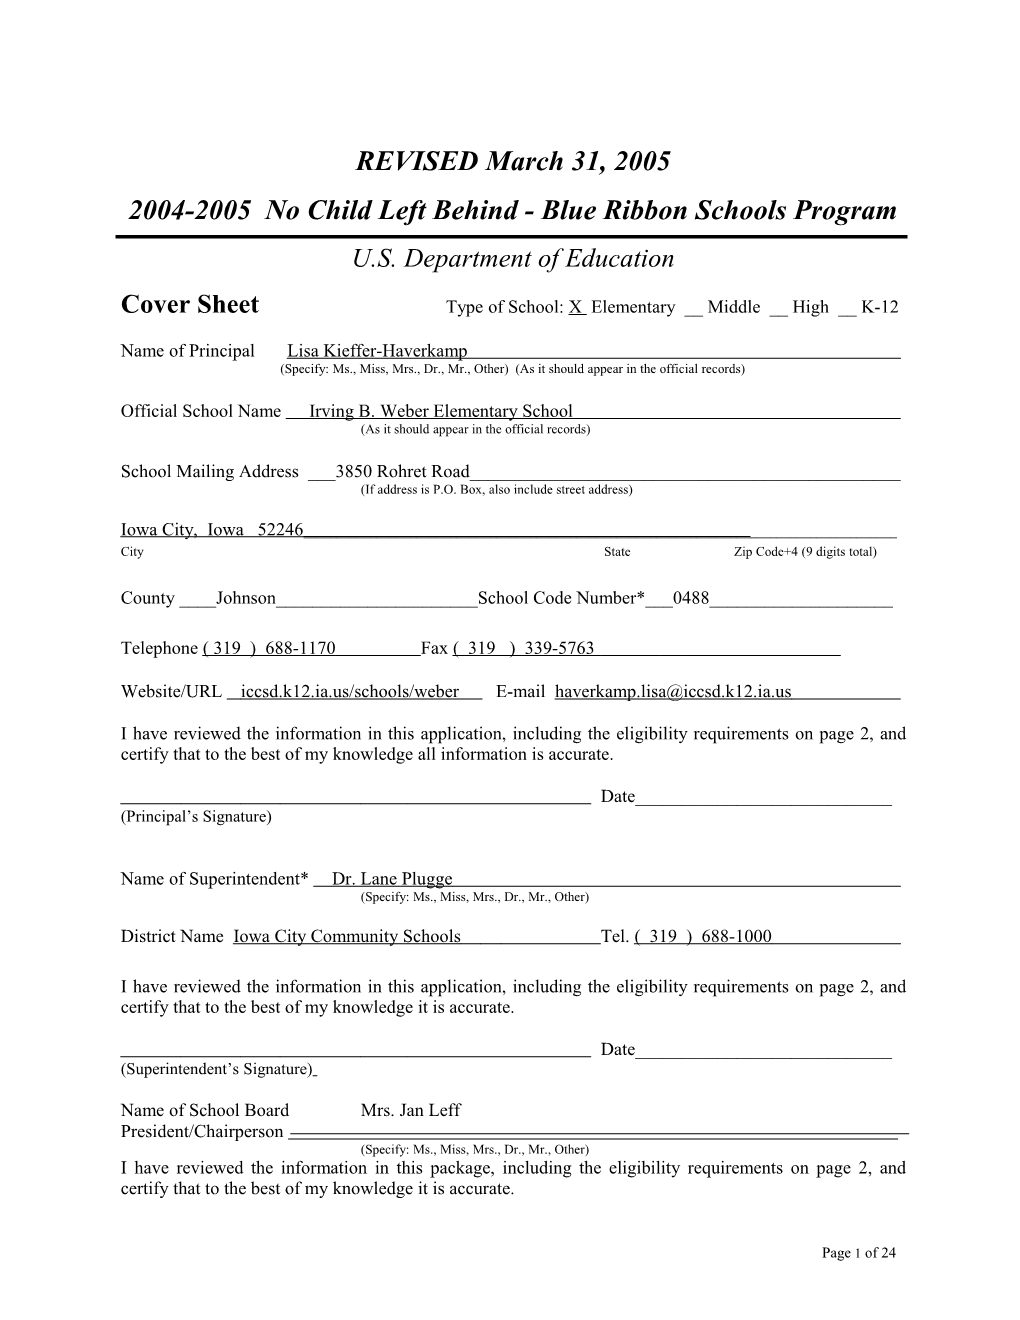 Irving B. Weber Elementary School Application: 2004-2005, No Child Left Behind - Blue Ribbon